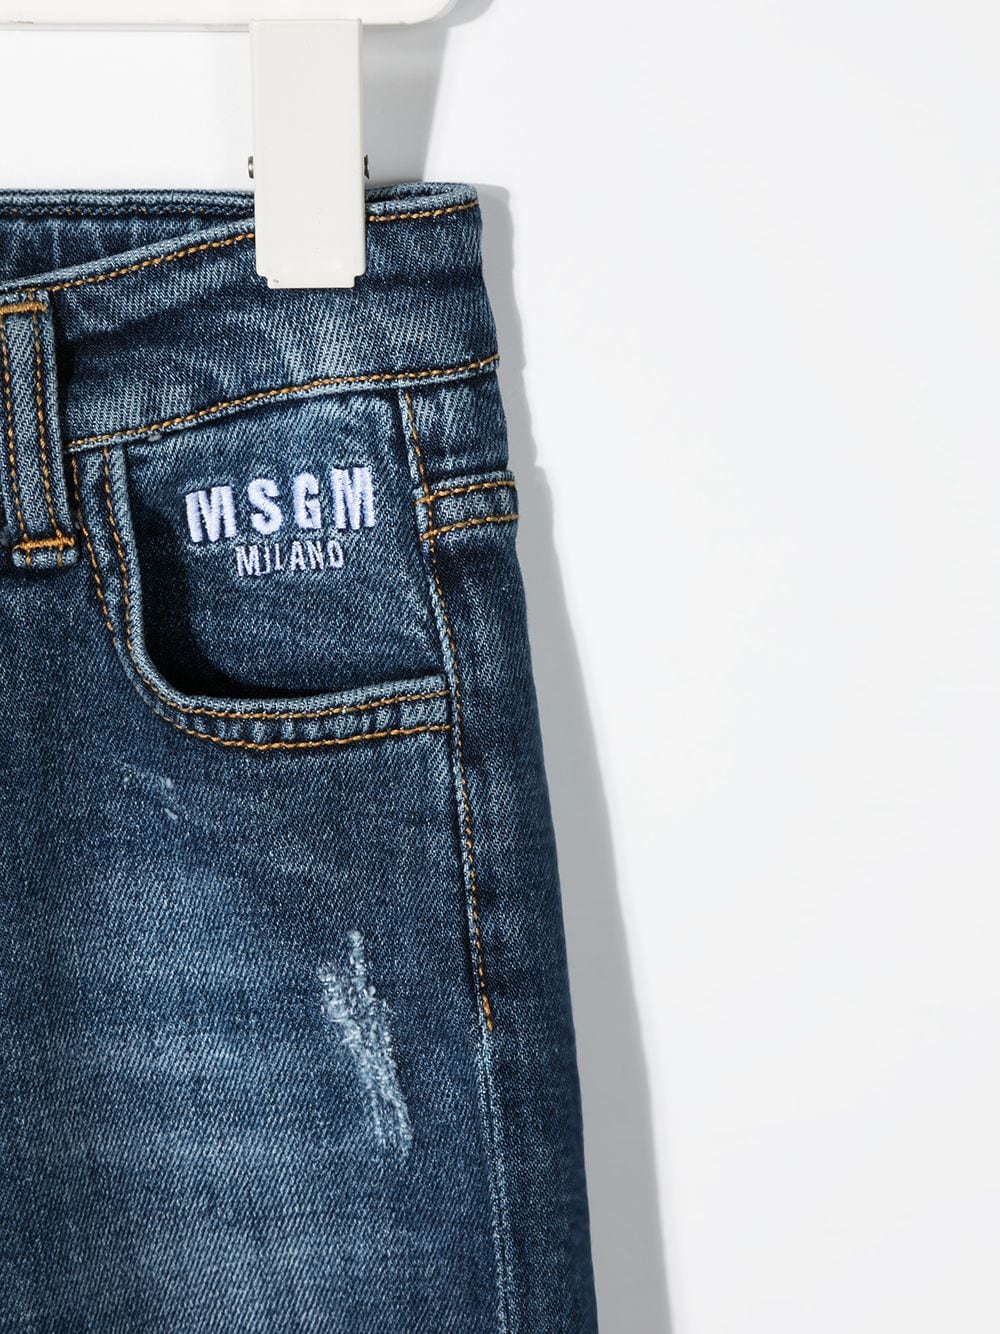 фото Msgm kids джинсы прямого кроя с логотипом